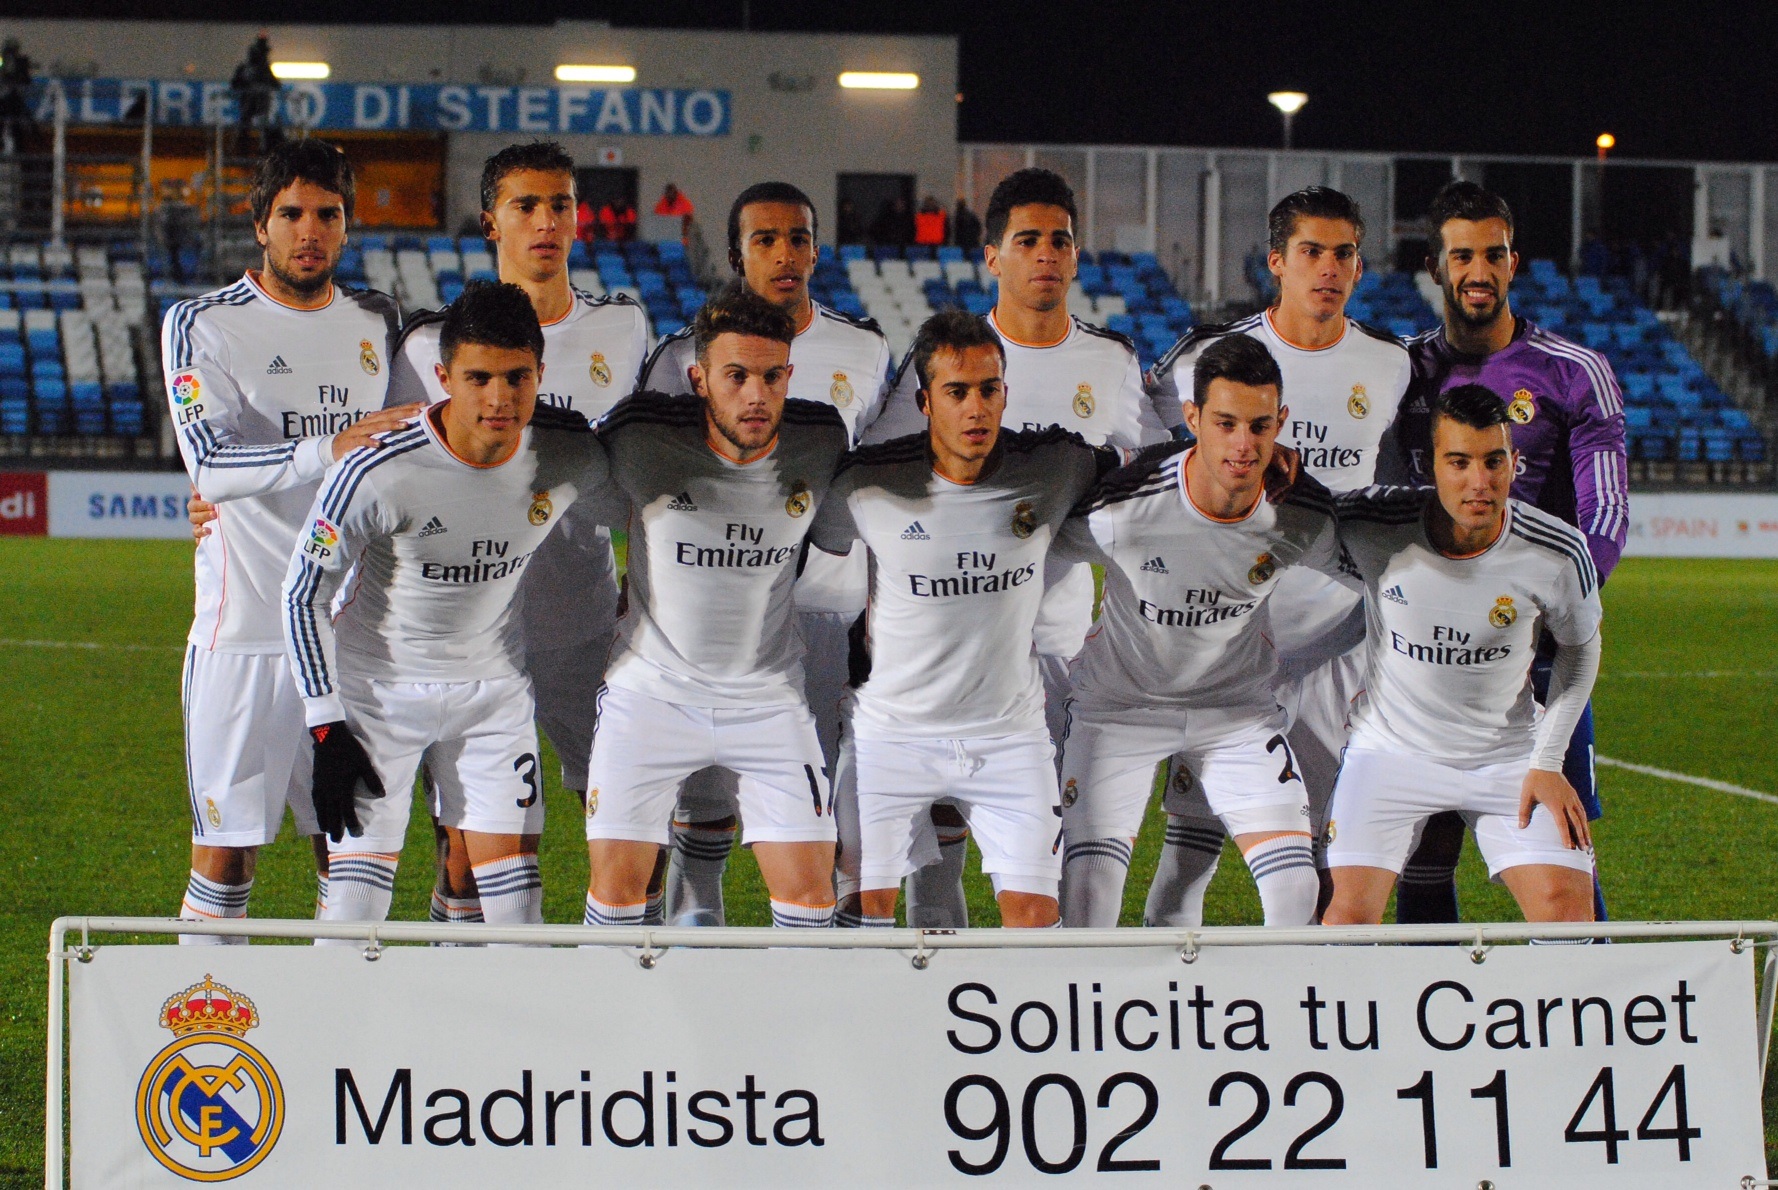 Real Madrid Castilla Backgrounds on Wallpapers Vista